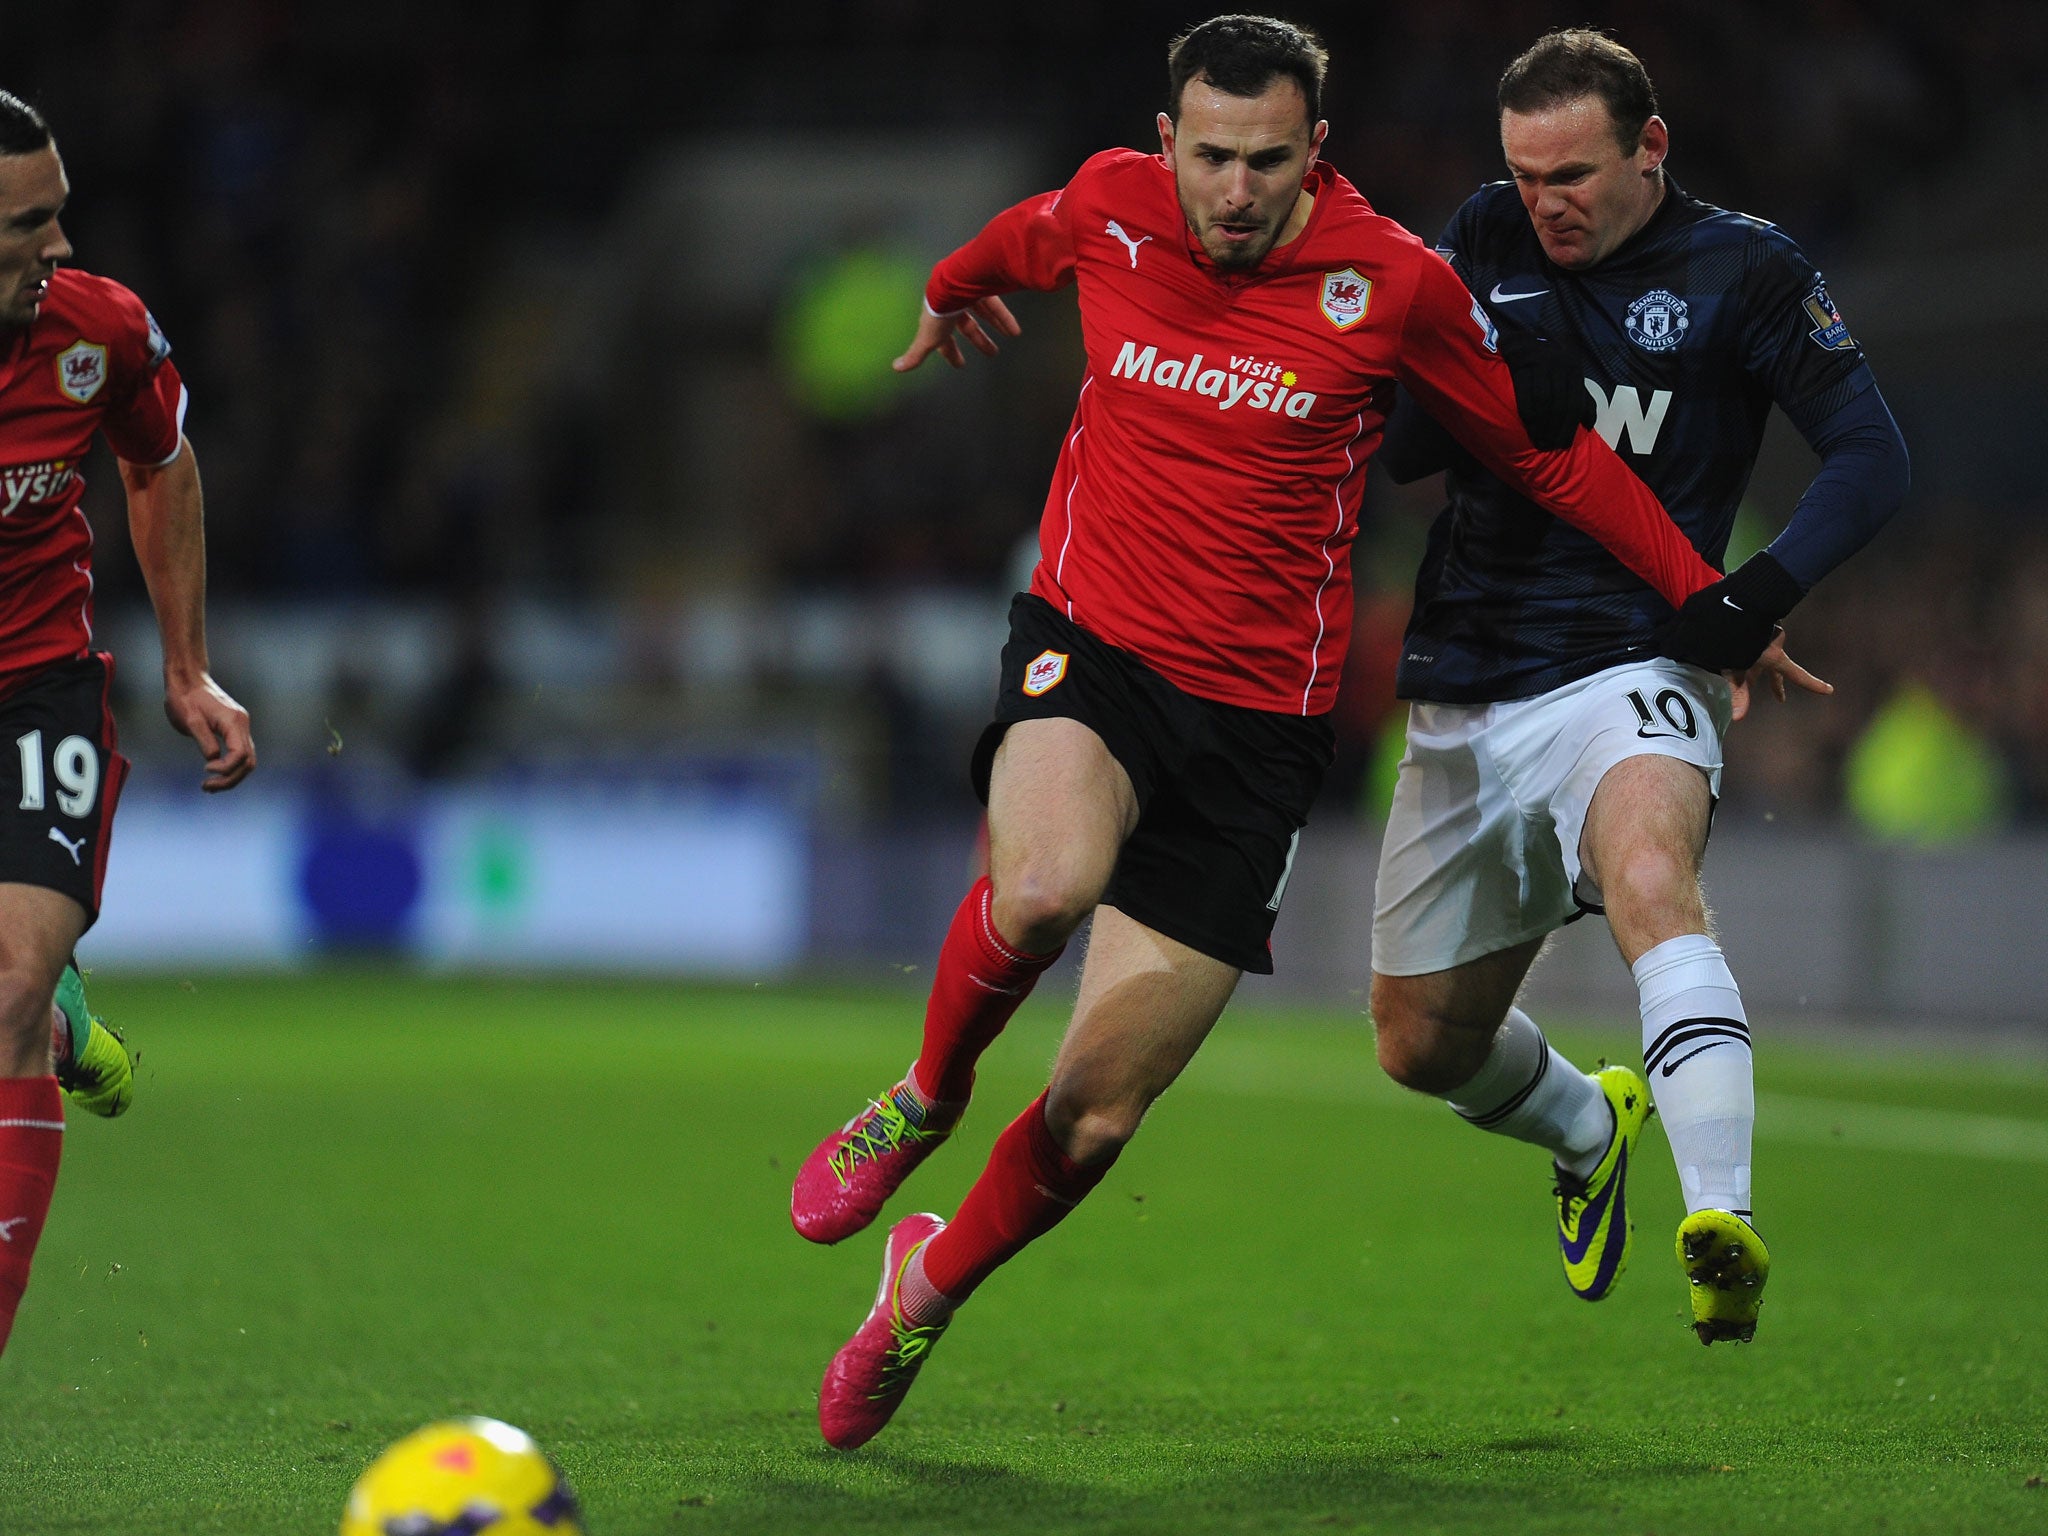 Manchester United striker Wayne Rooney kicks out at Cardiff midfielder Jordon Mutch